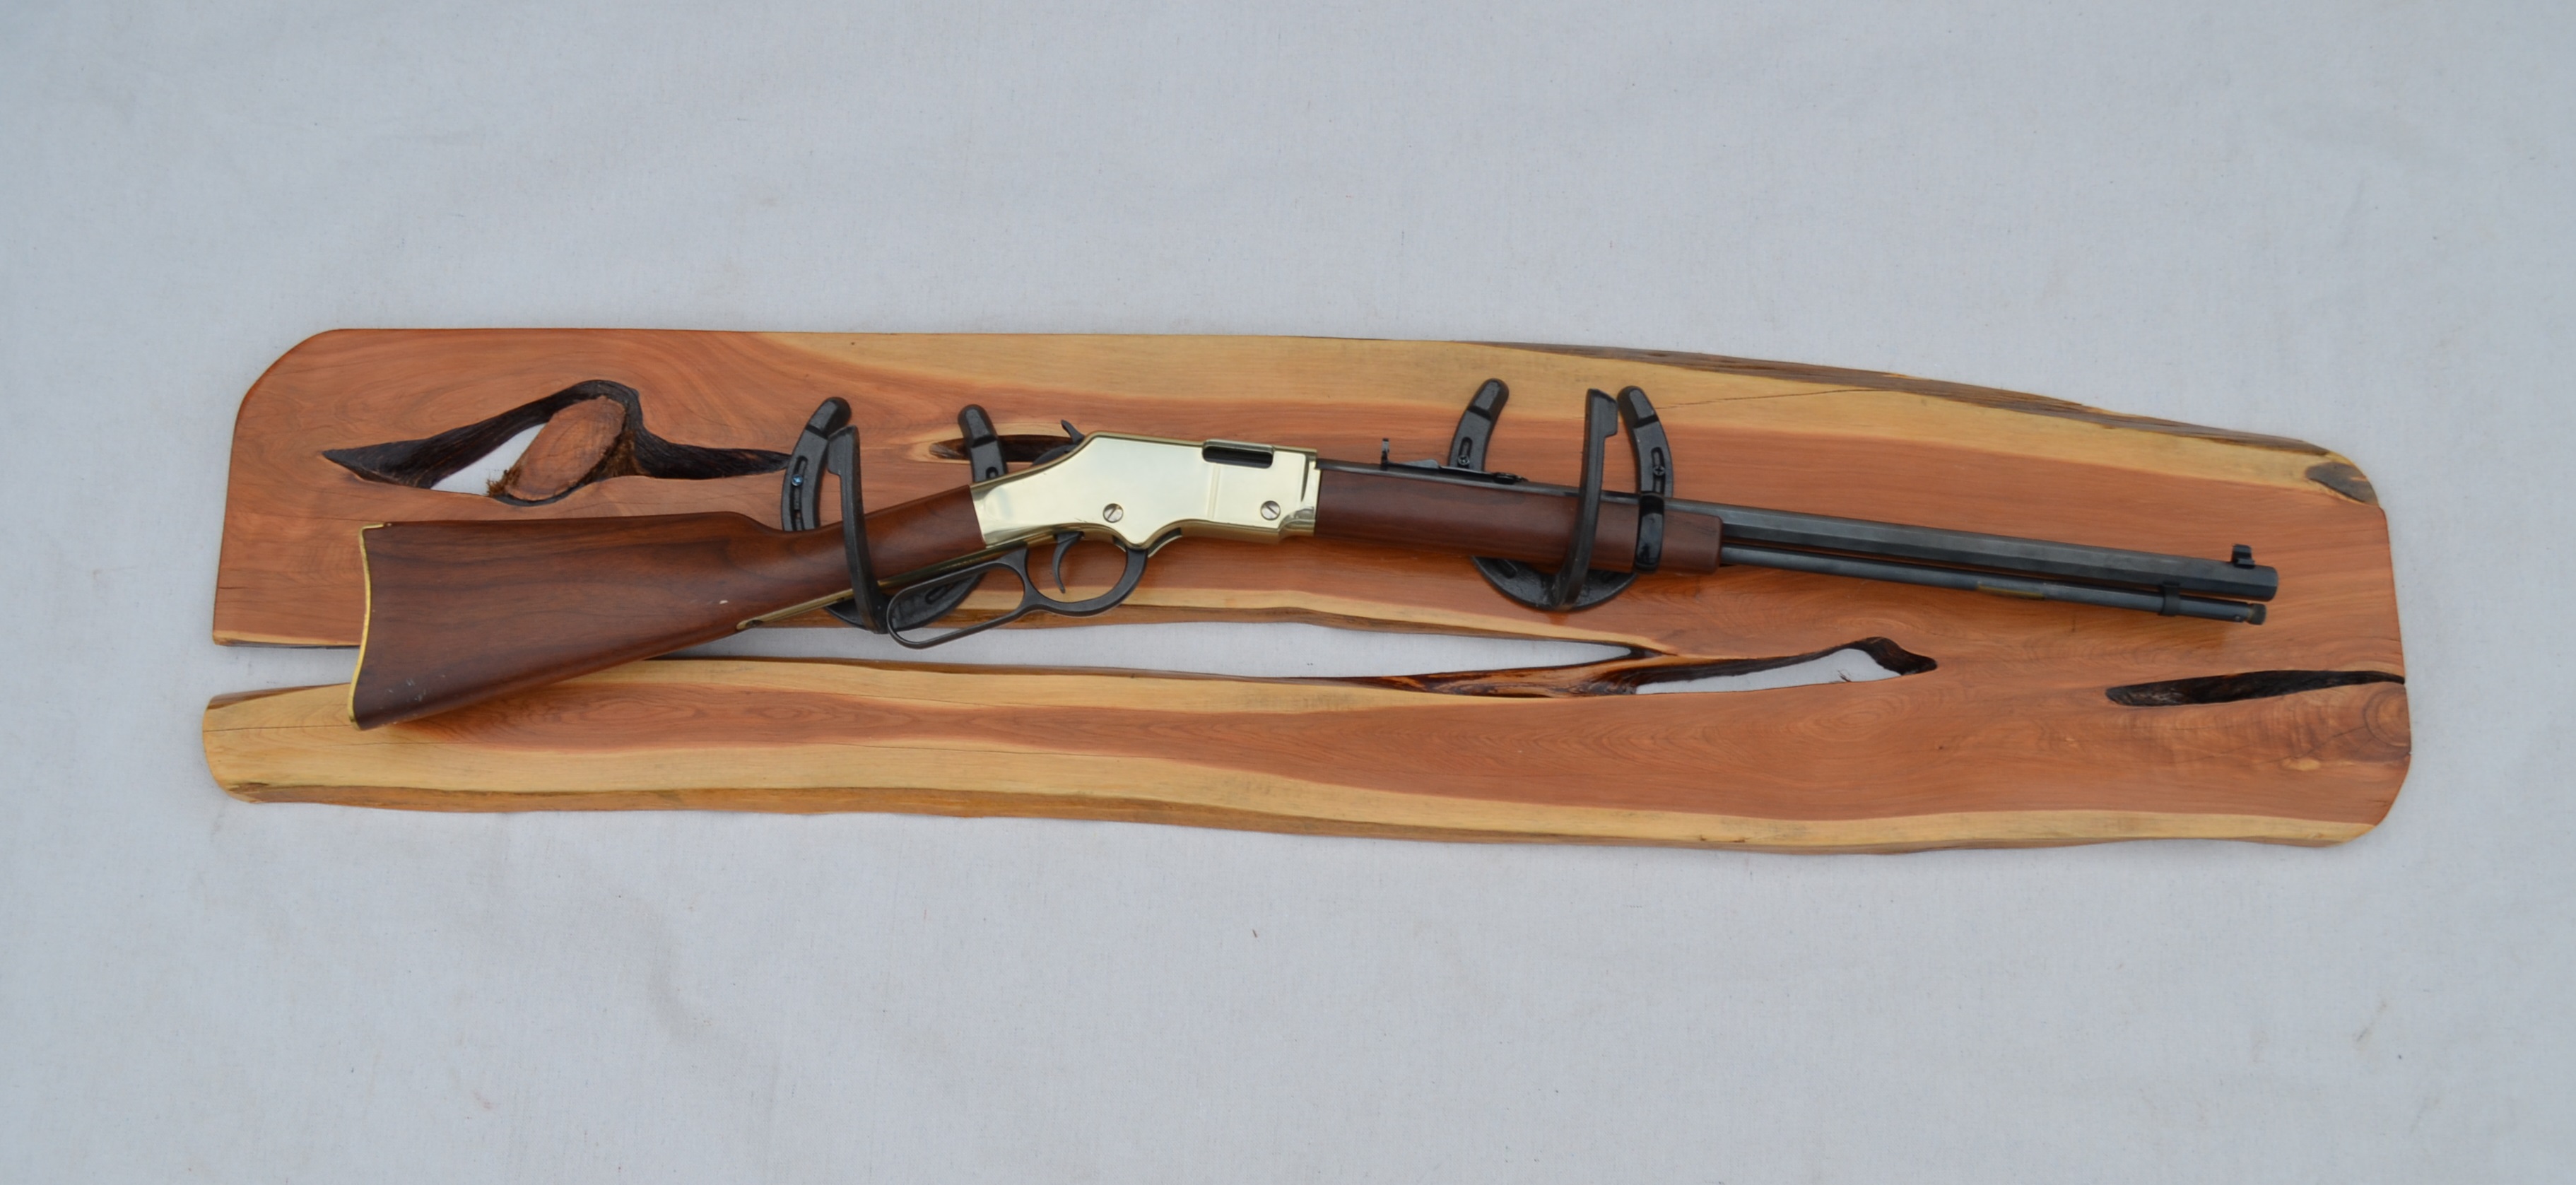 Custom Gun Rack Is the Perfect Gift for Hunting Season Birthdays!